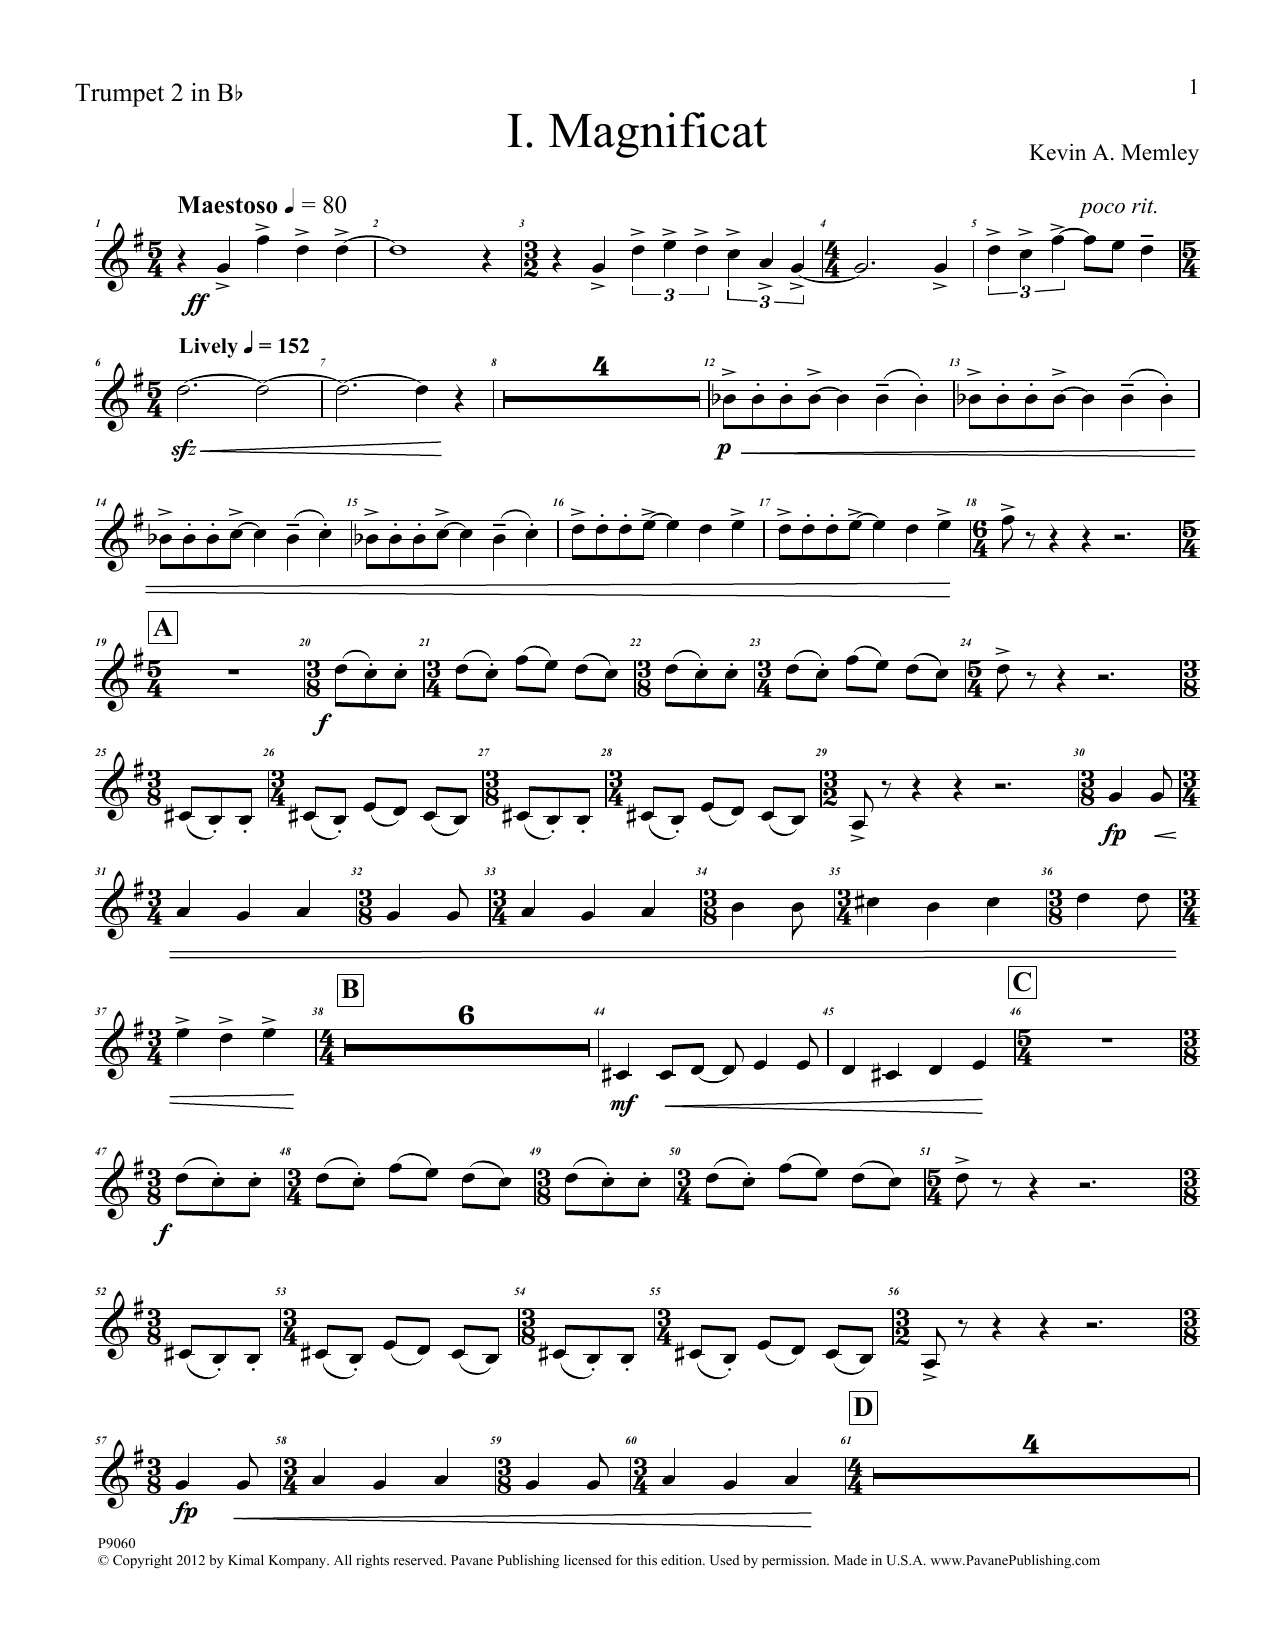 Download Kevin Memley Magnificat (Brass Quintet) (Parts) - Tr Sheet Music